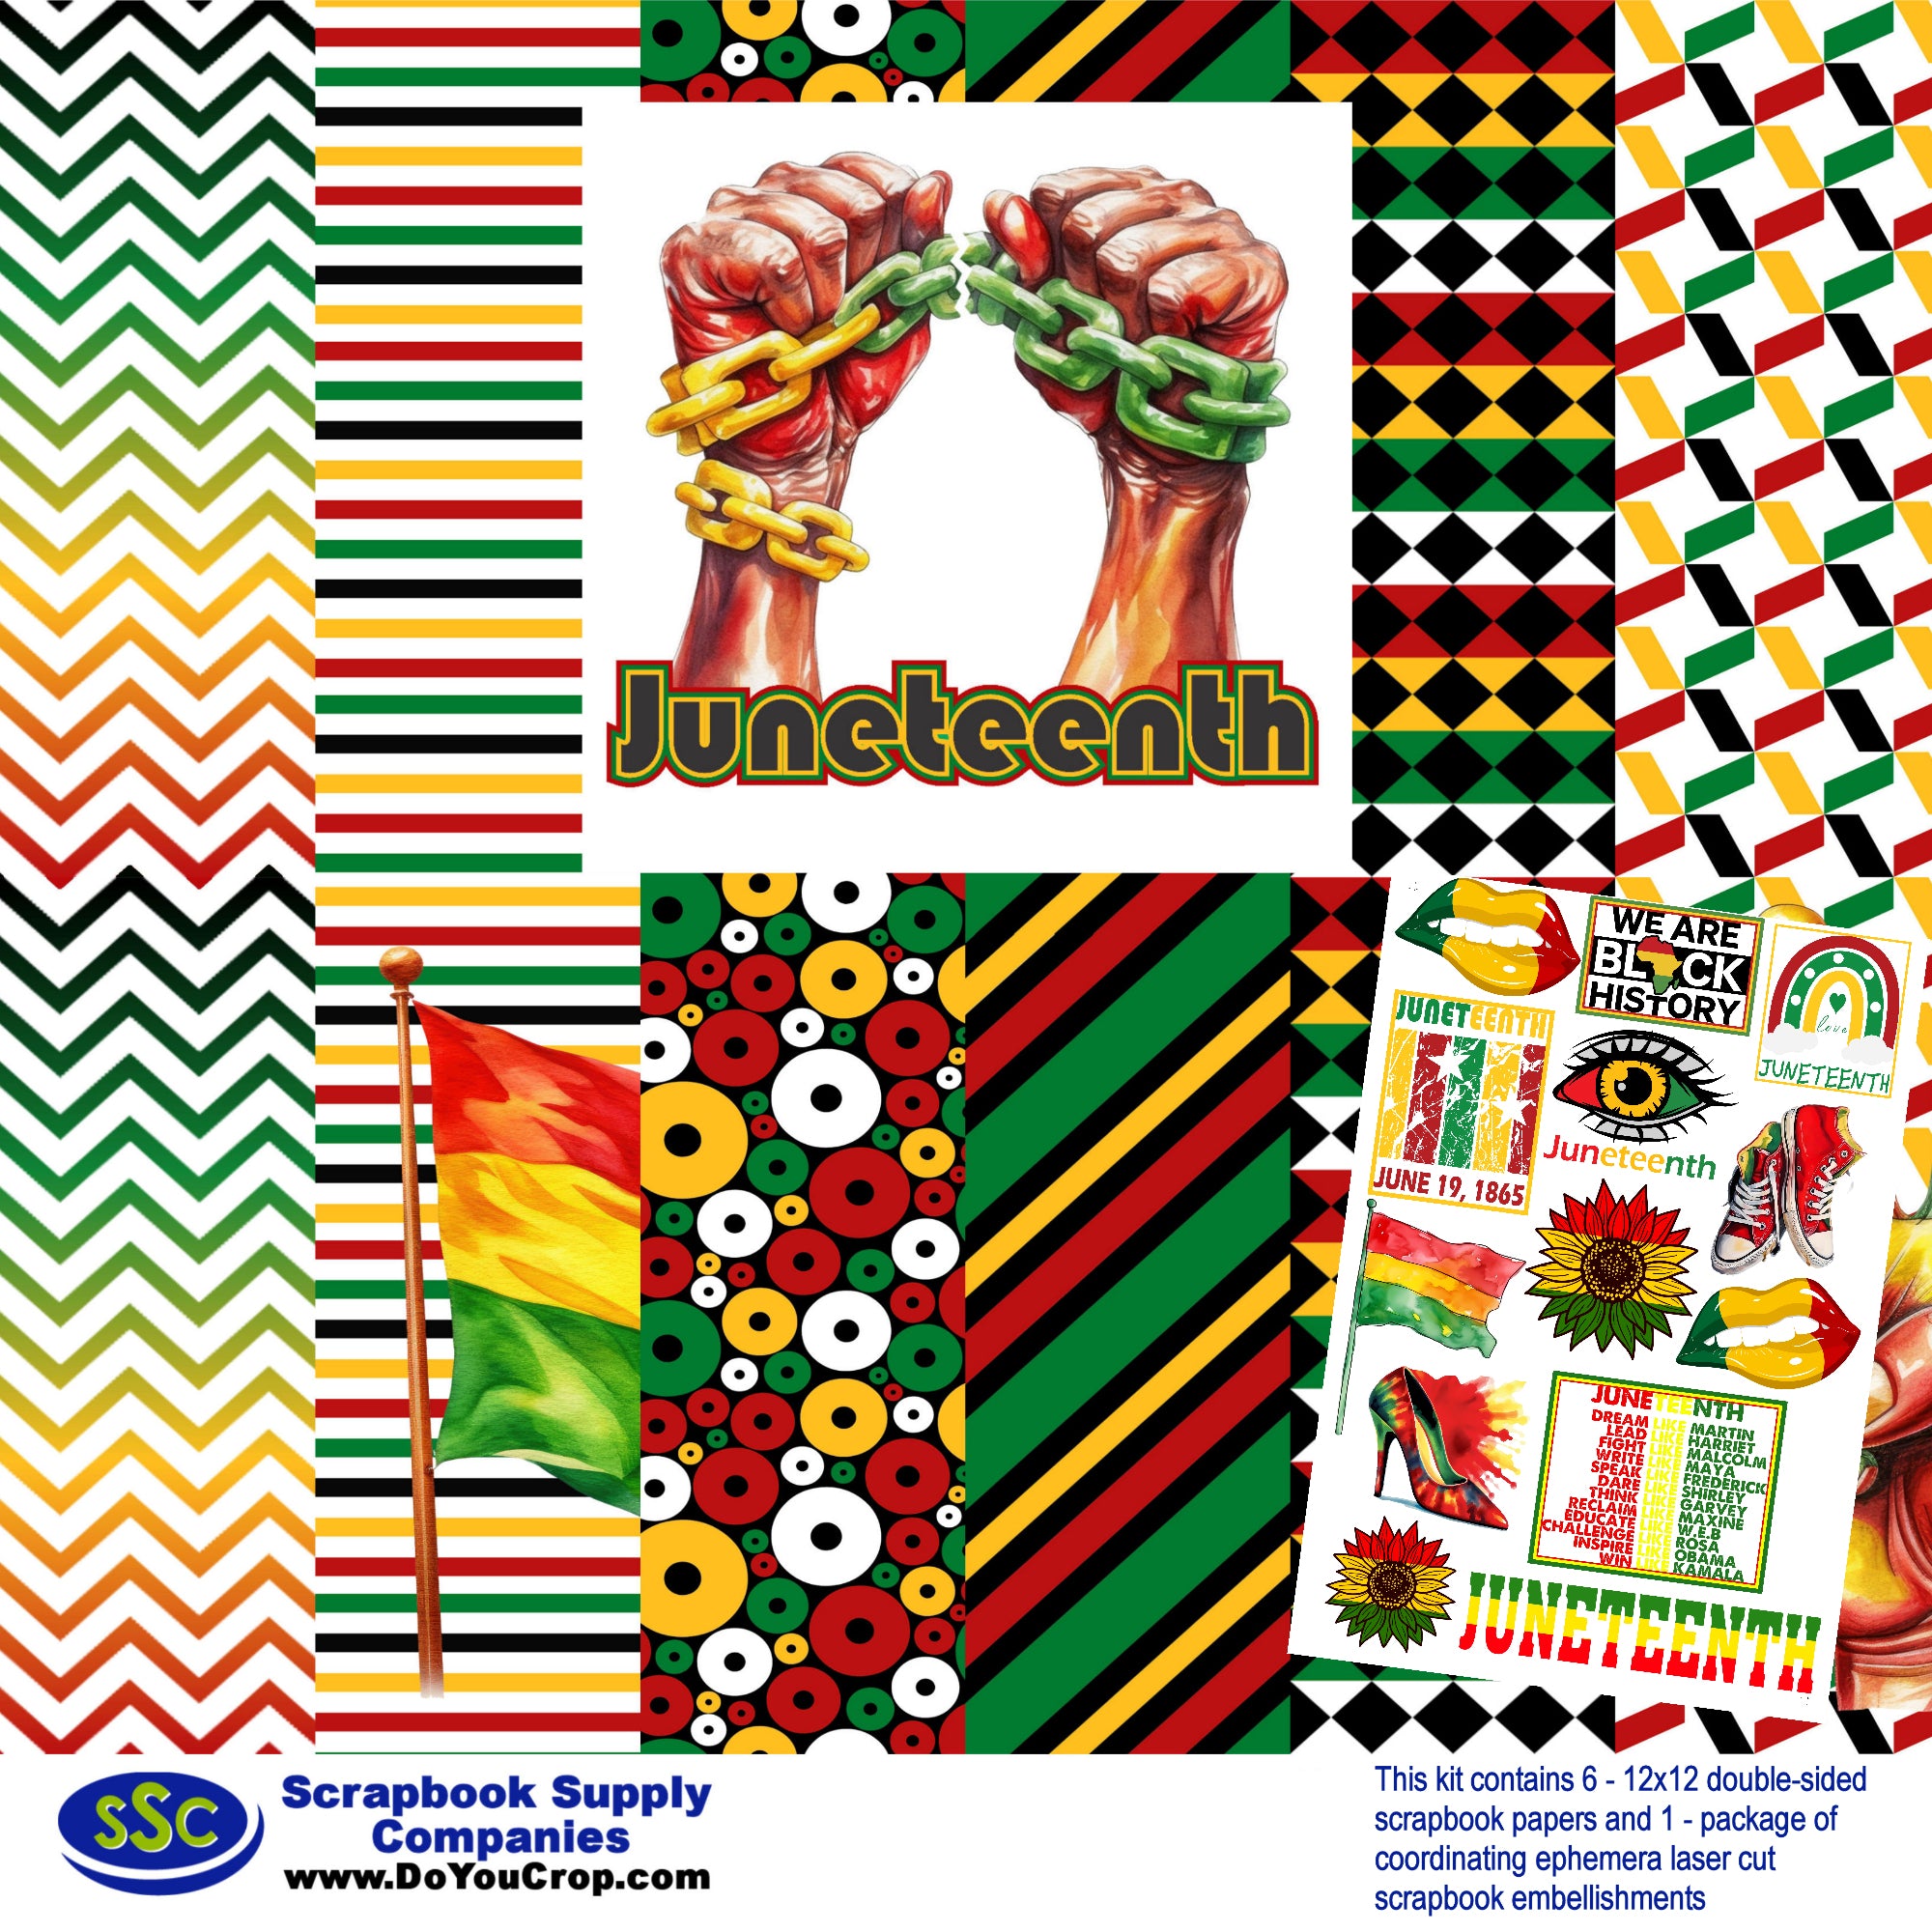 Juneteenth 12 x 12 Scrapbook Paper & Embellishment Kit by SSC Designs